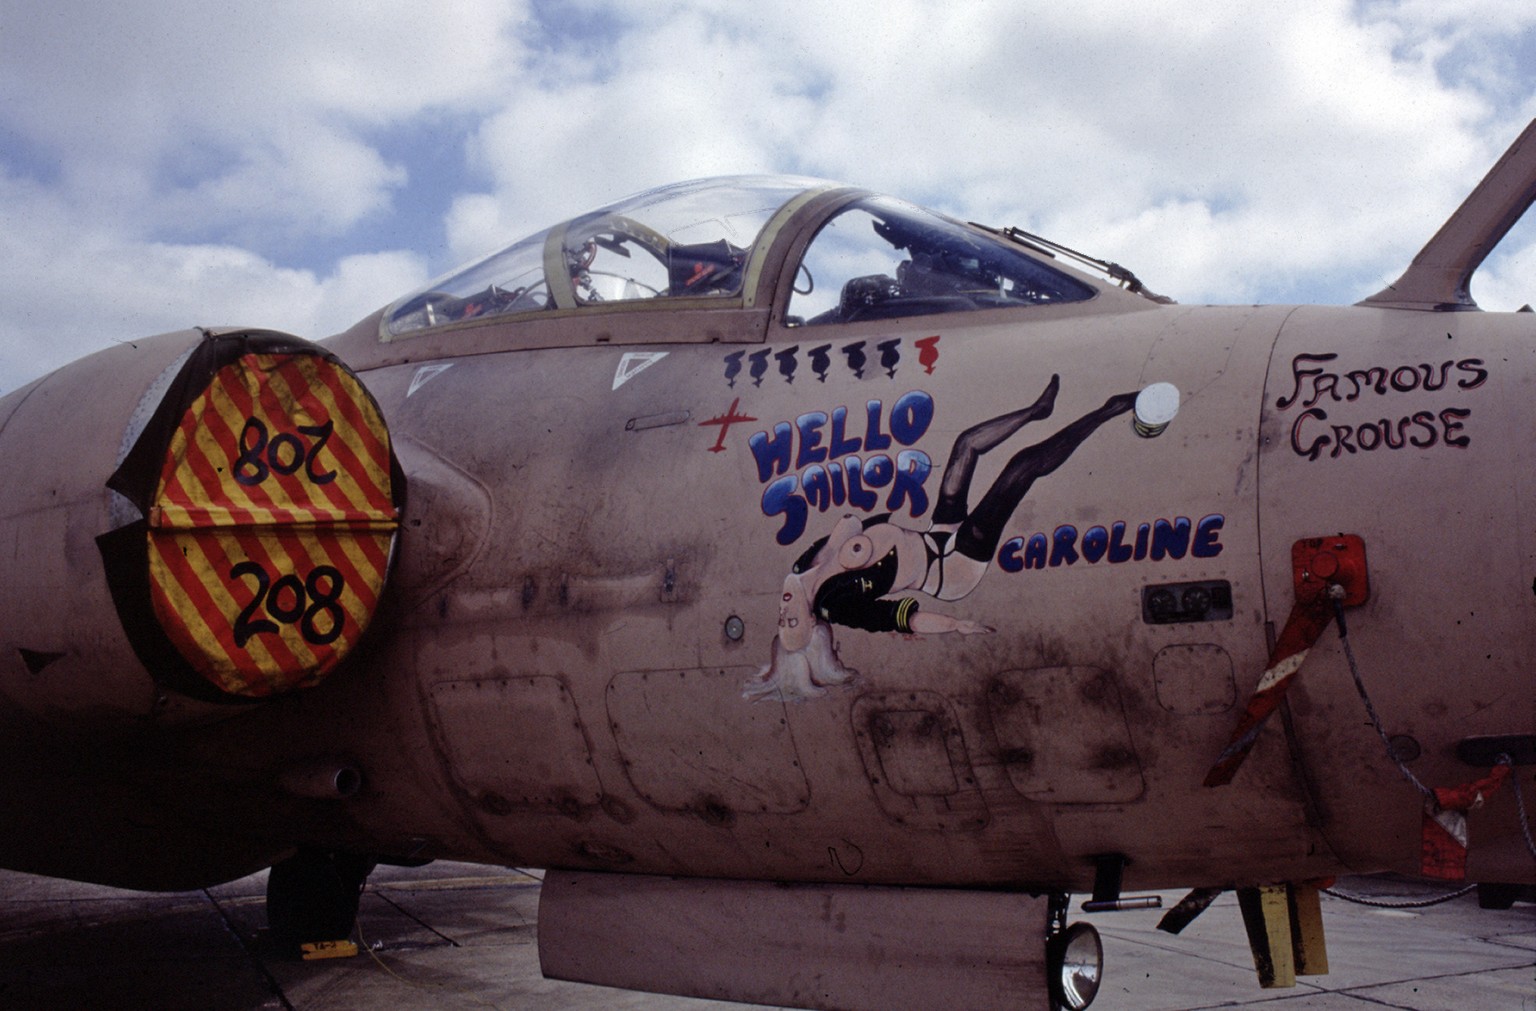 hawker buccaneer royal air force irak 1991 desert storm flugzeug wikicommons